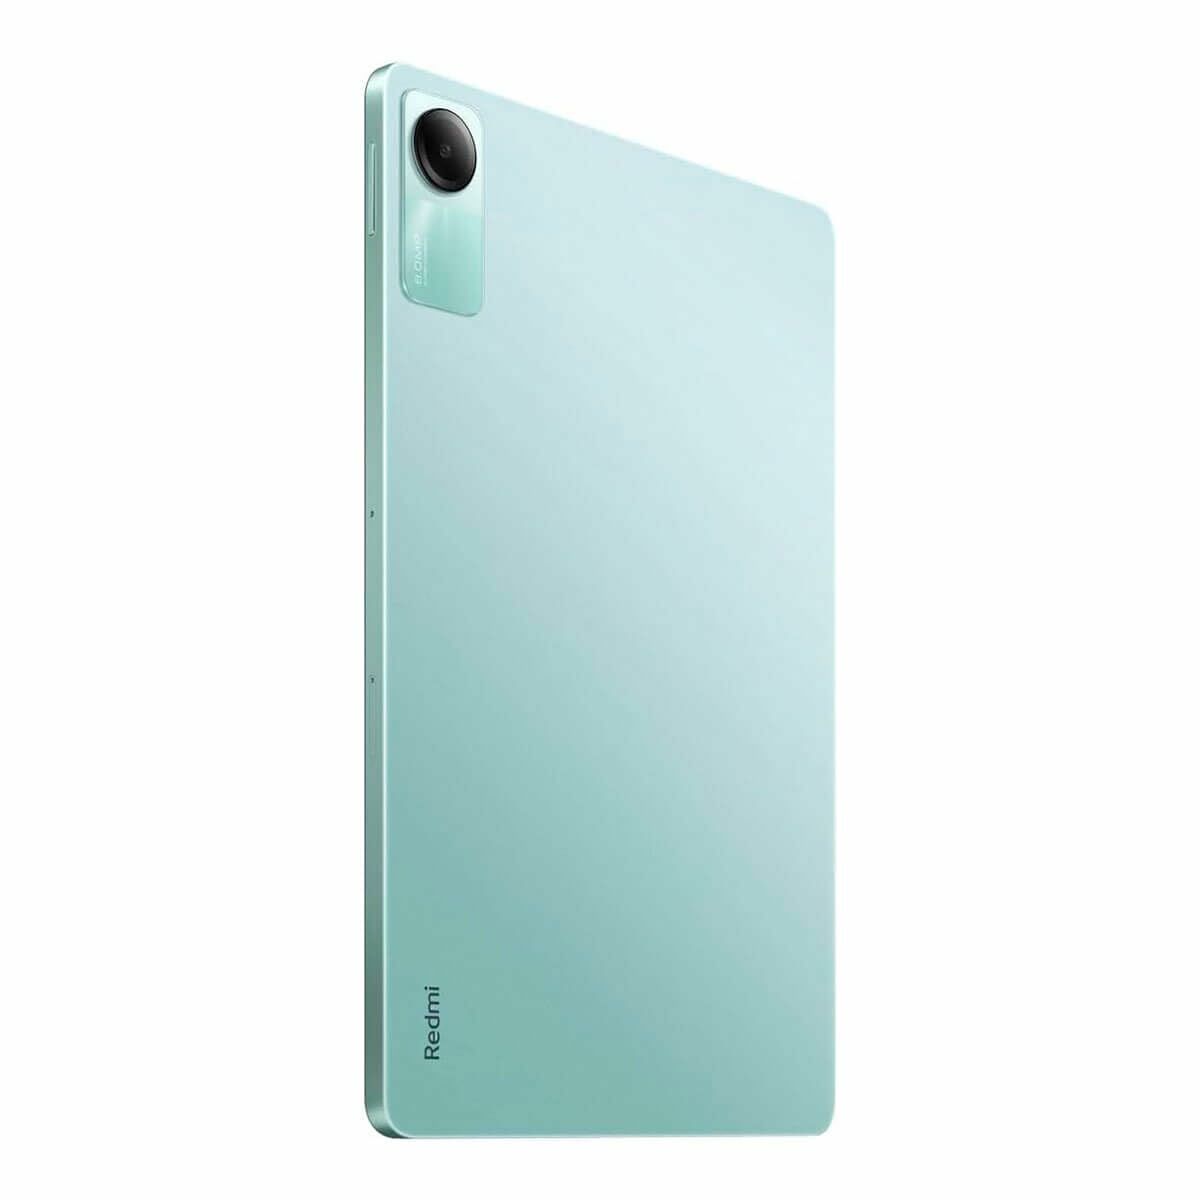 Tablet Xiaomi Redmi Pad SE 8 GB RAM 256 GB 11" Qualcomm Snapdragon 680 Green